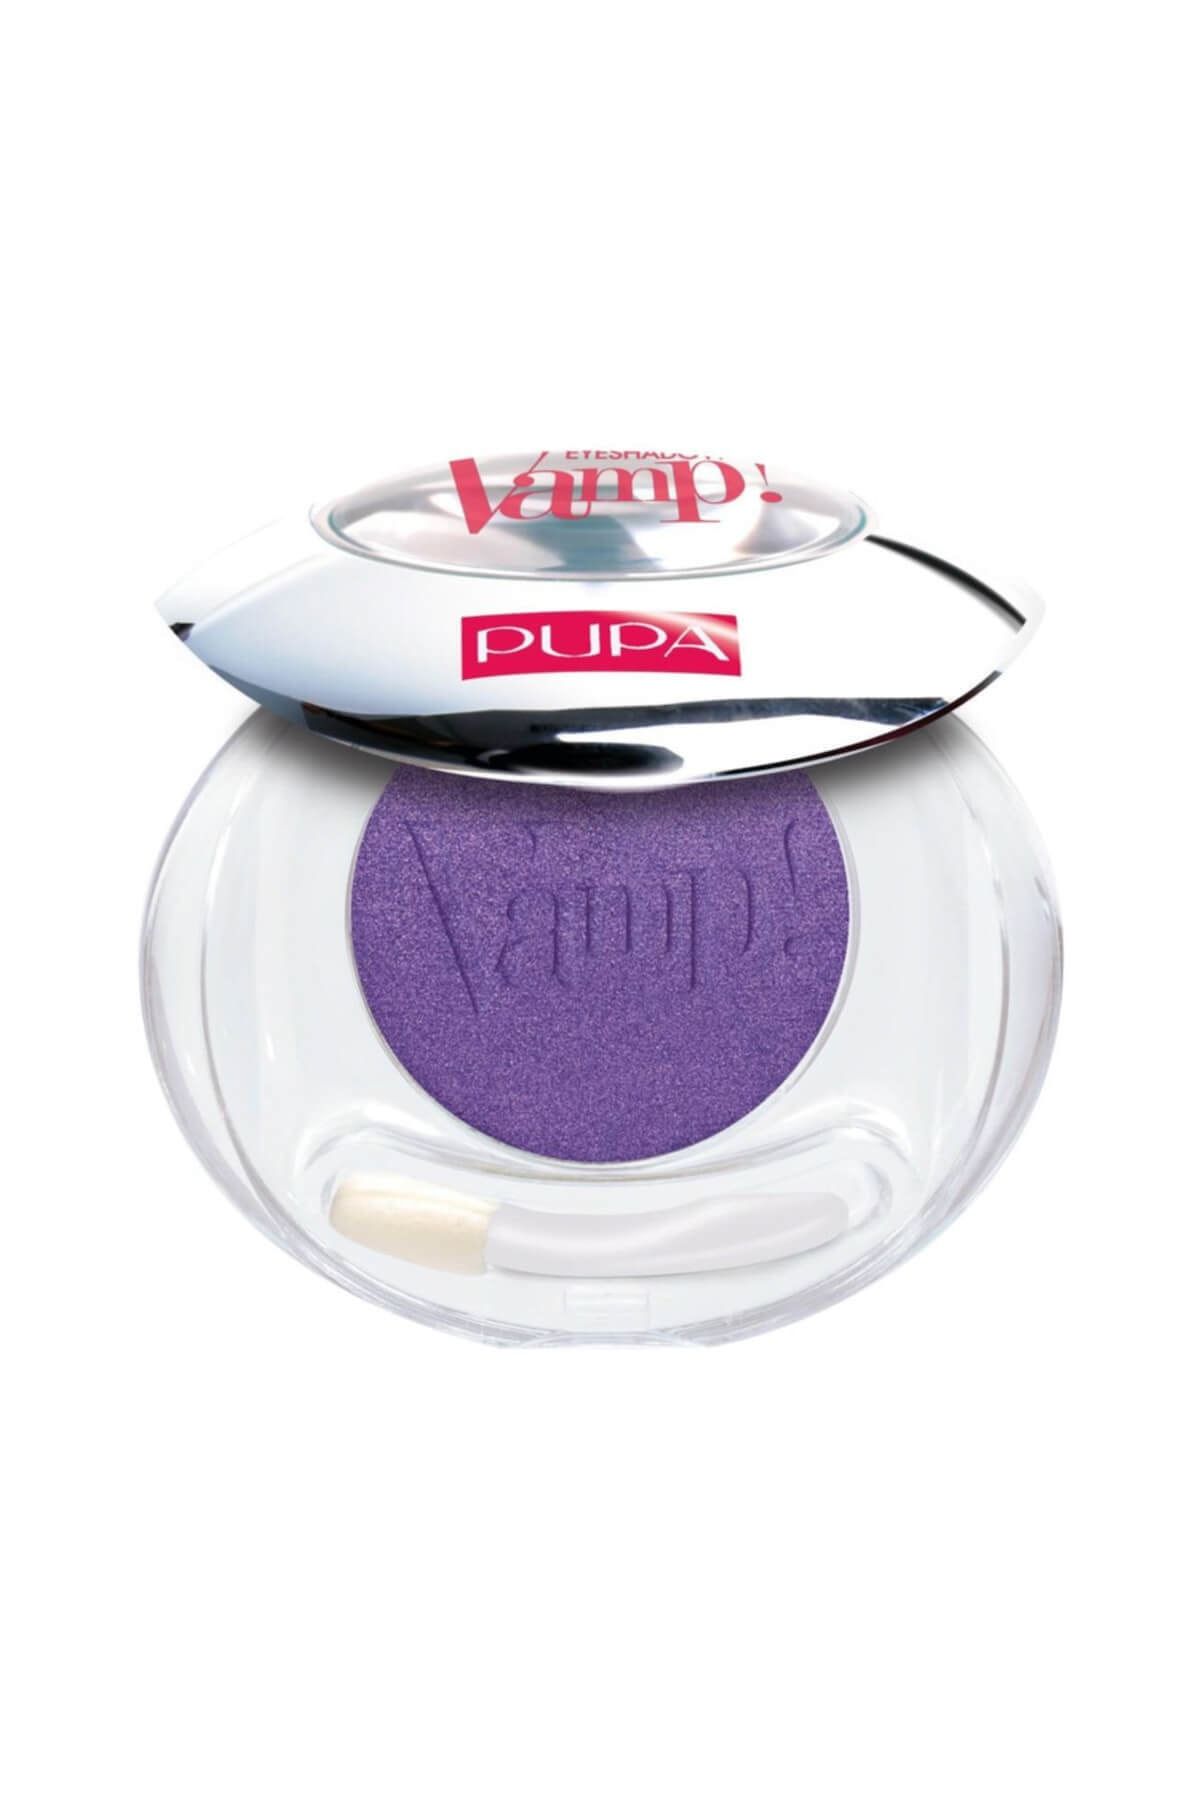 Pupa Milano Göz Farı - Vamp! Compact Eyeshadow 205 Plastic Violet 8011607203451